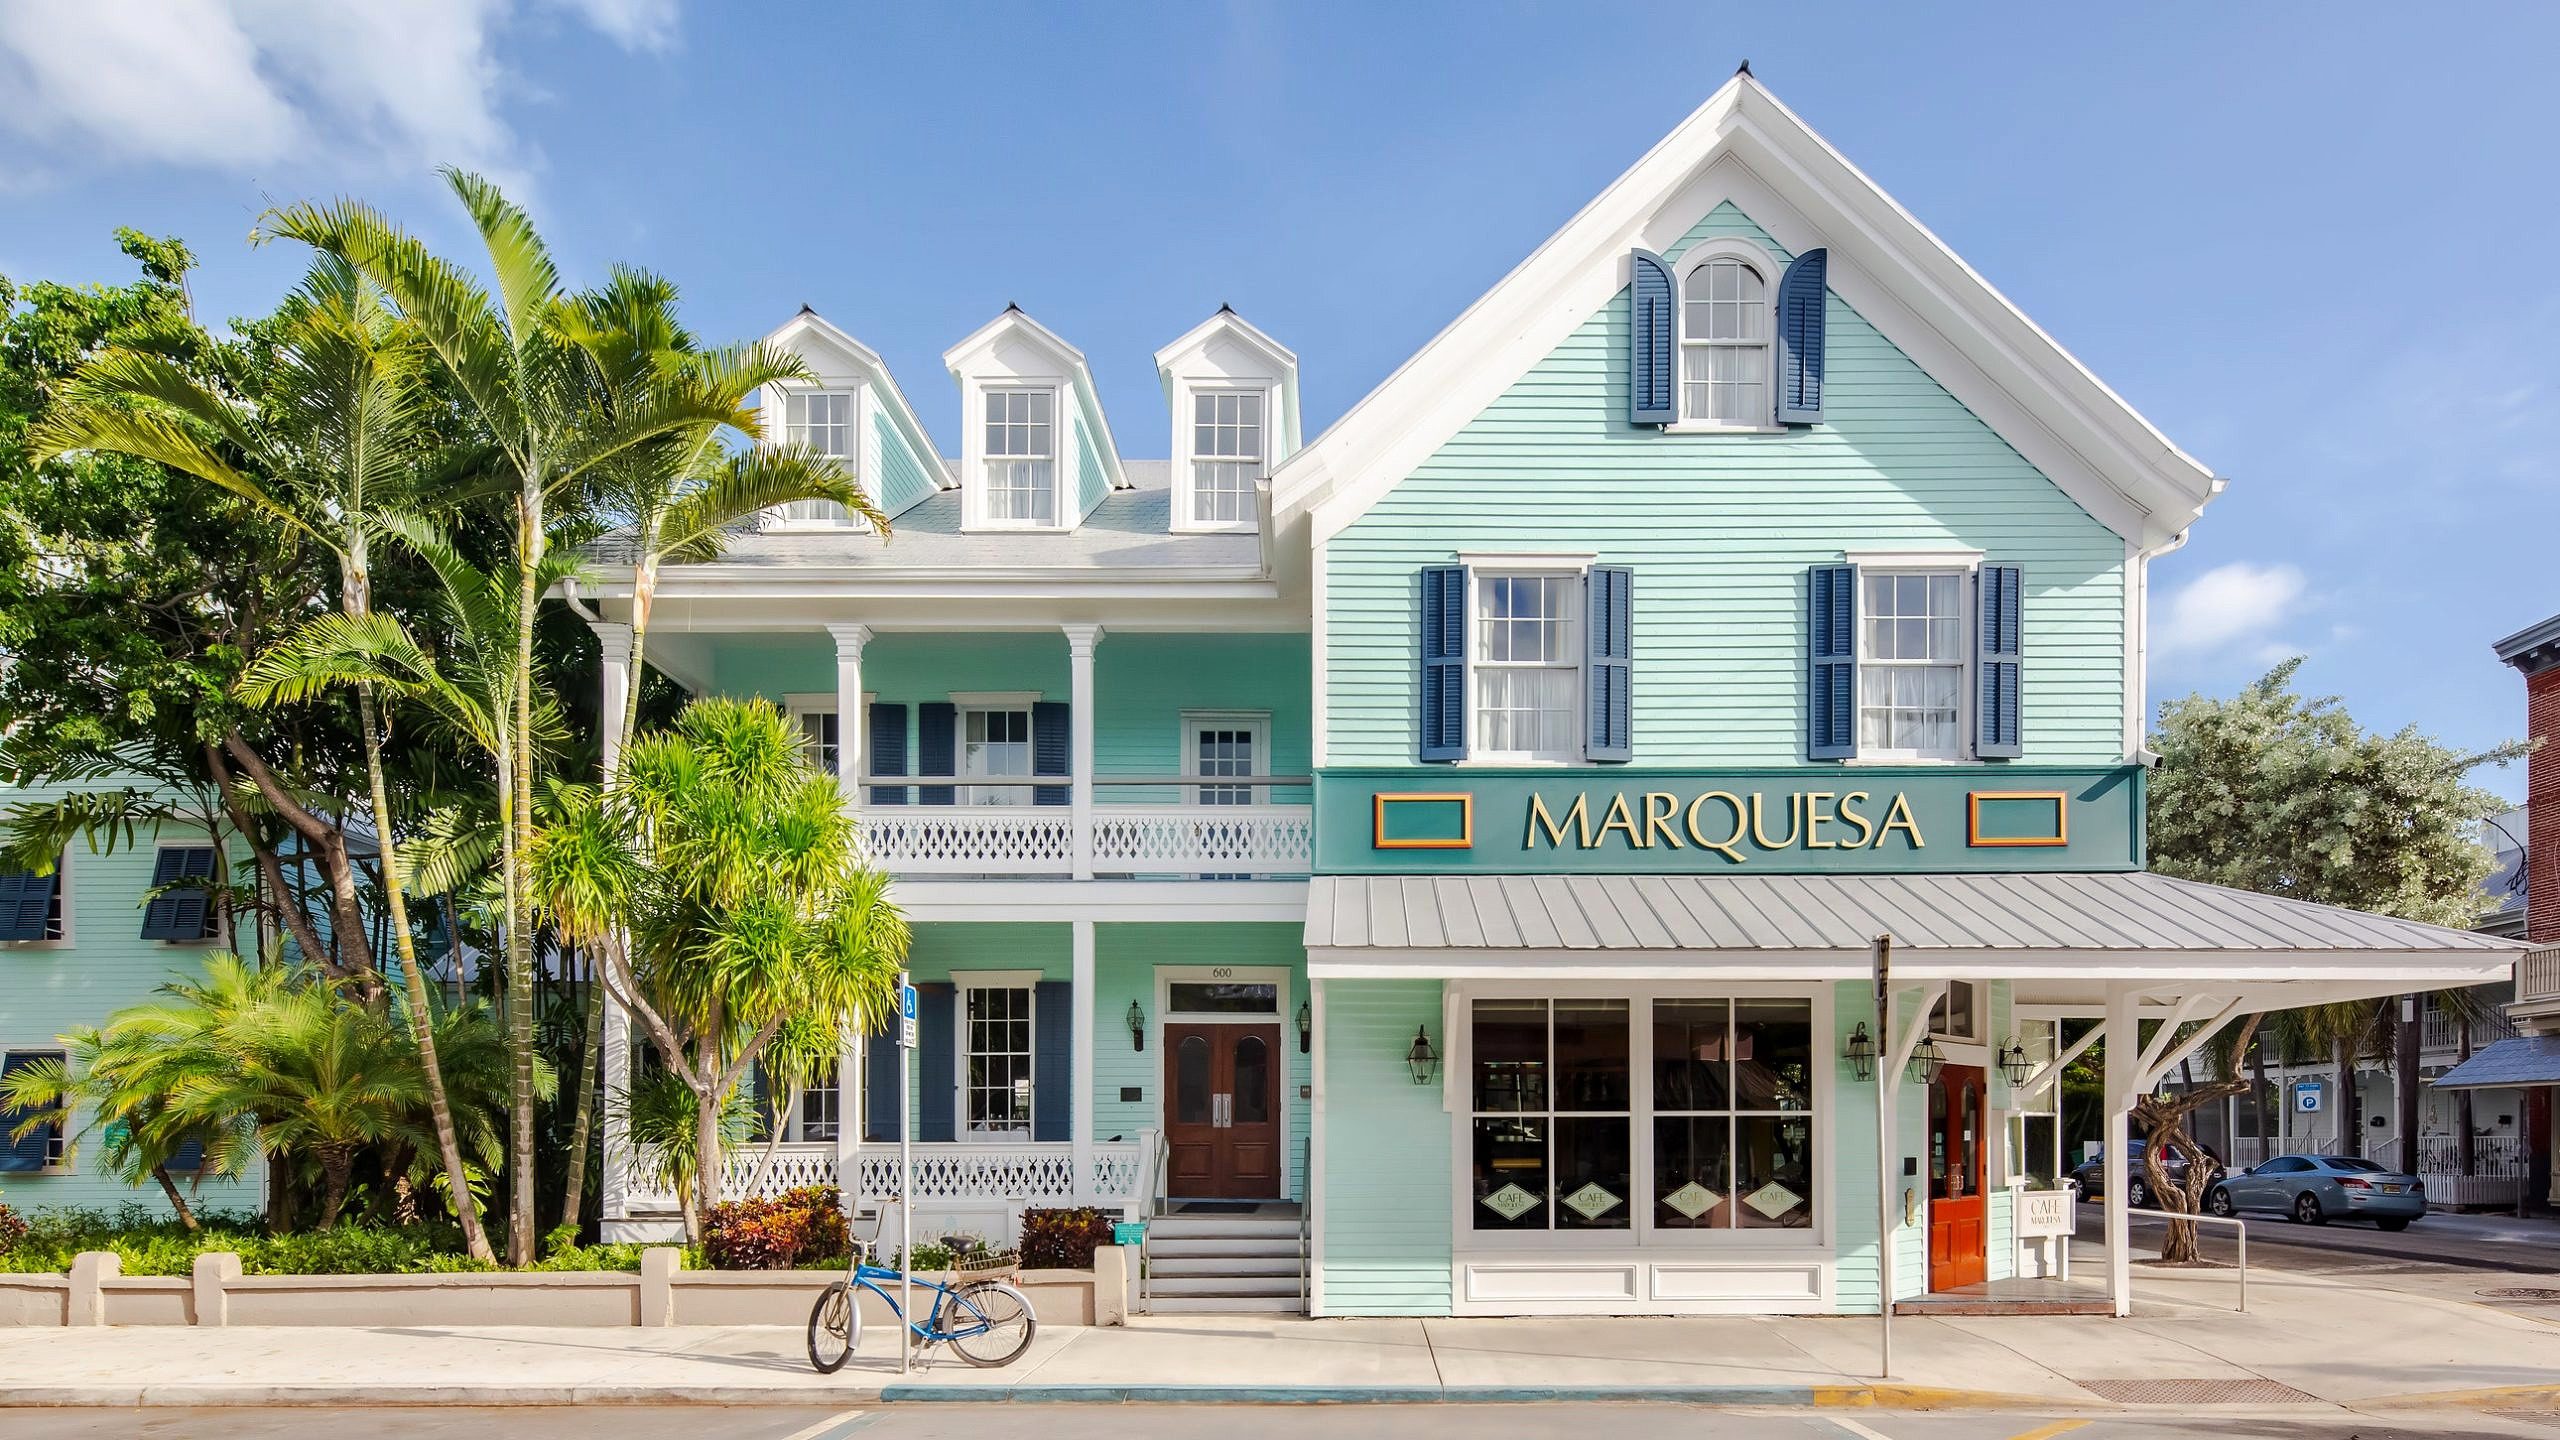 Cafe Marquesa Key West: Top 10 restaurant